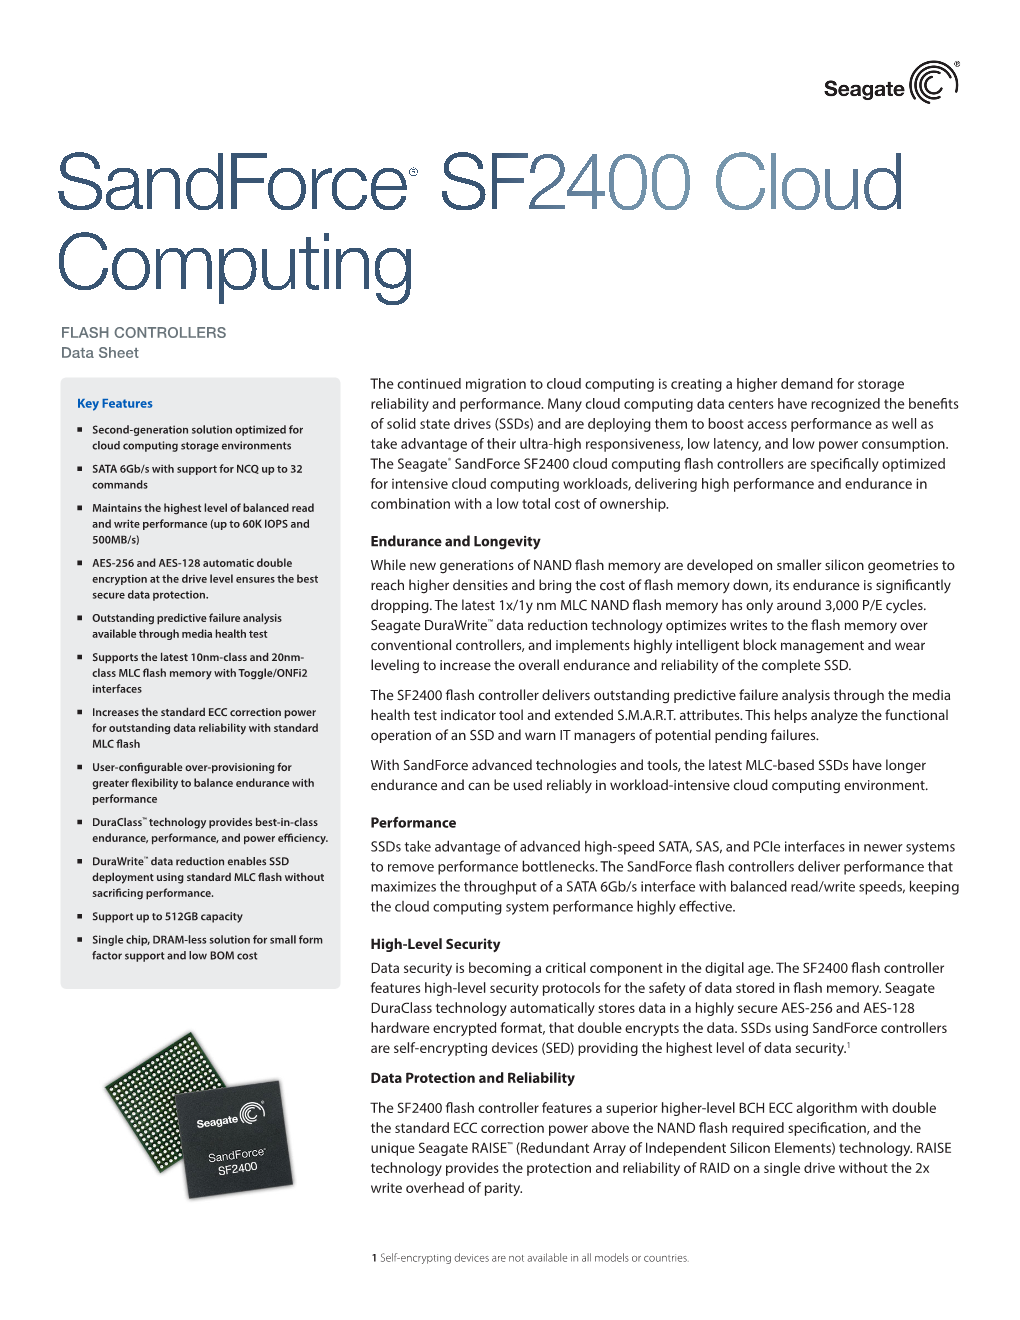 Sandforce® SF2400 Cloud Computing